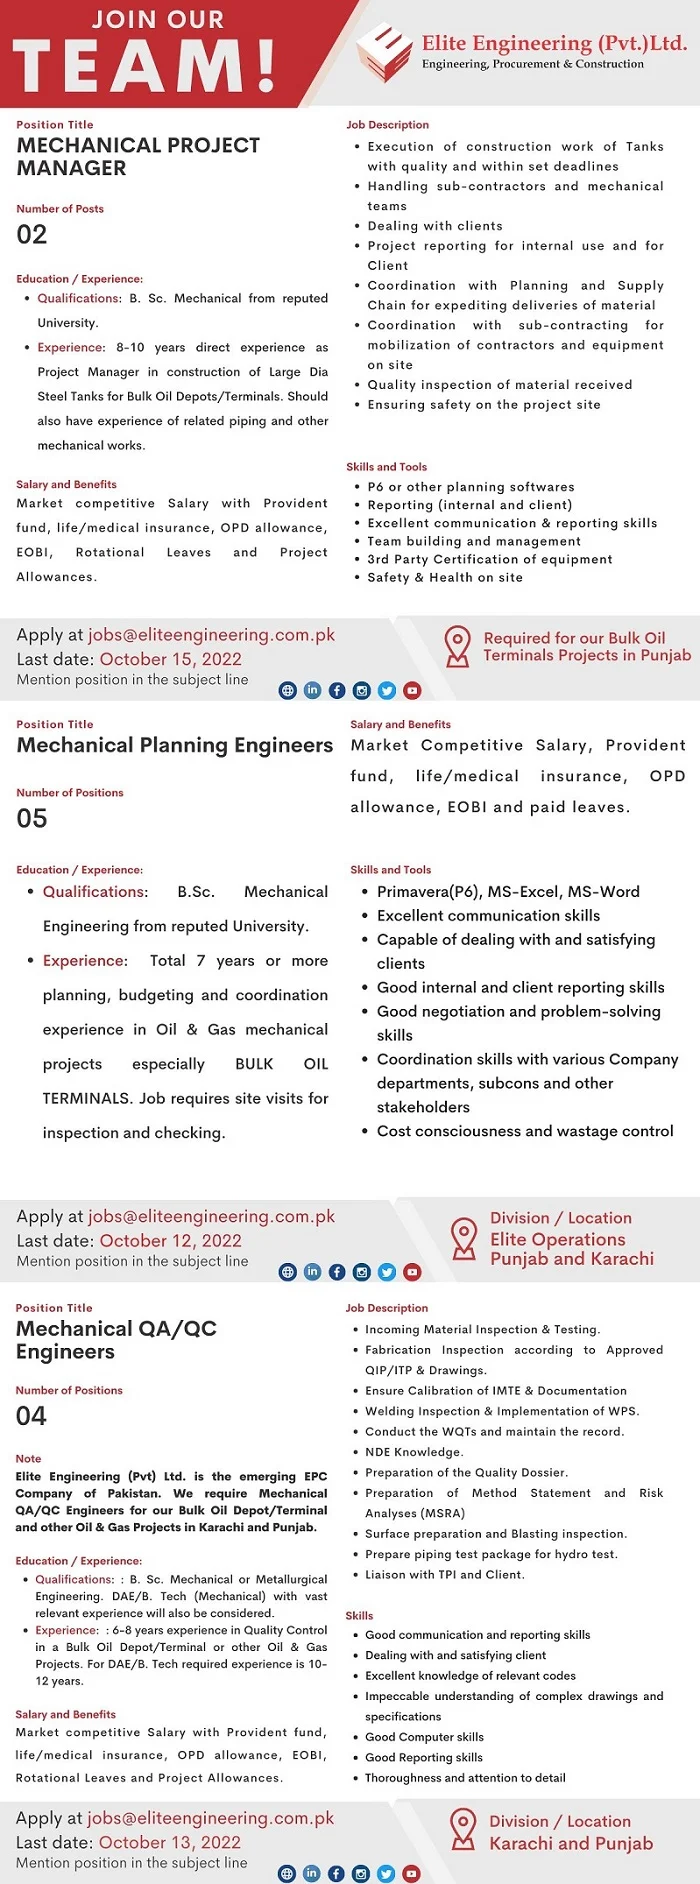 Elite-Engineering-Pvt-Limited-Lahore-Jobs-05-Oct-2022